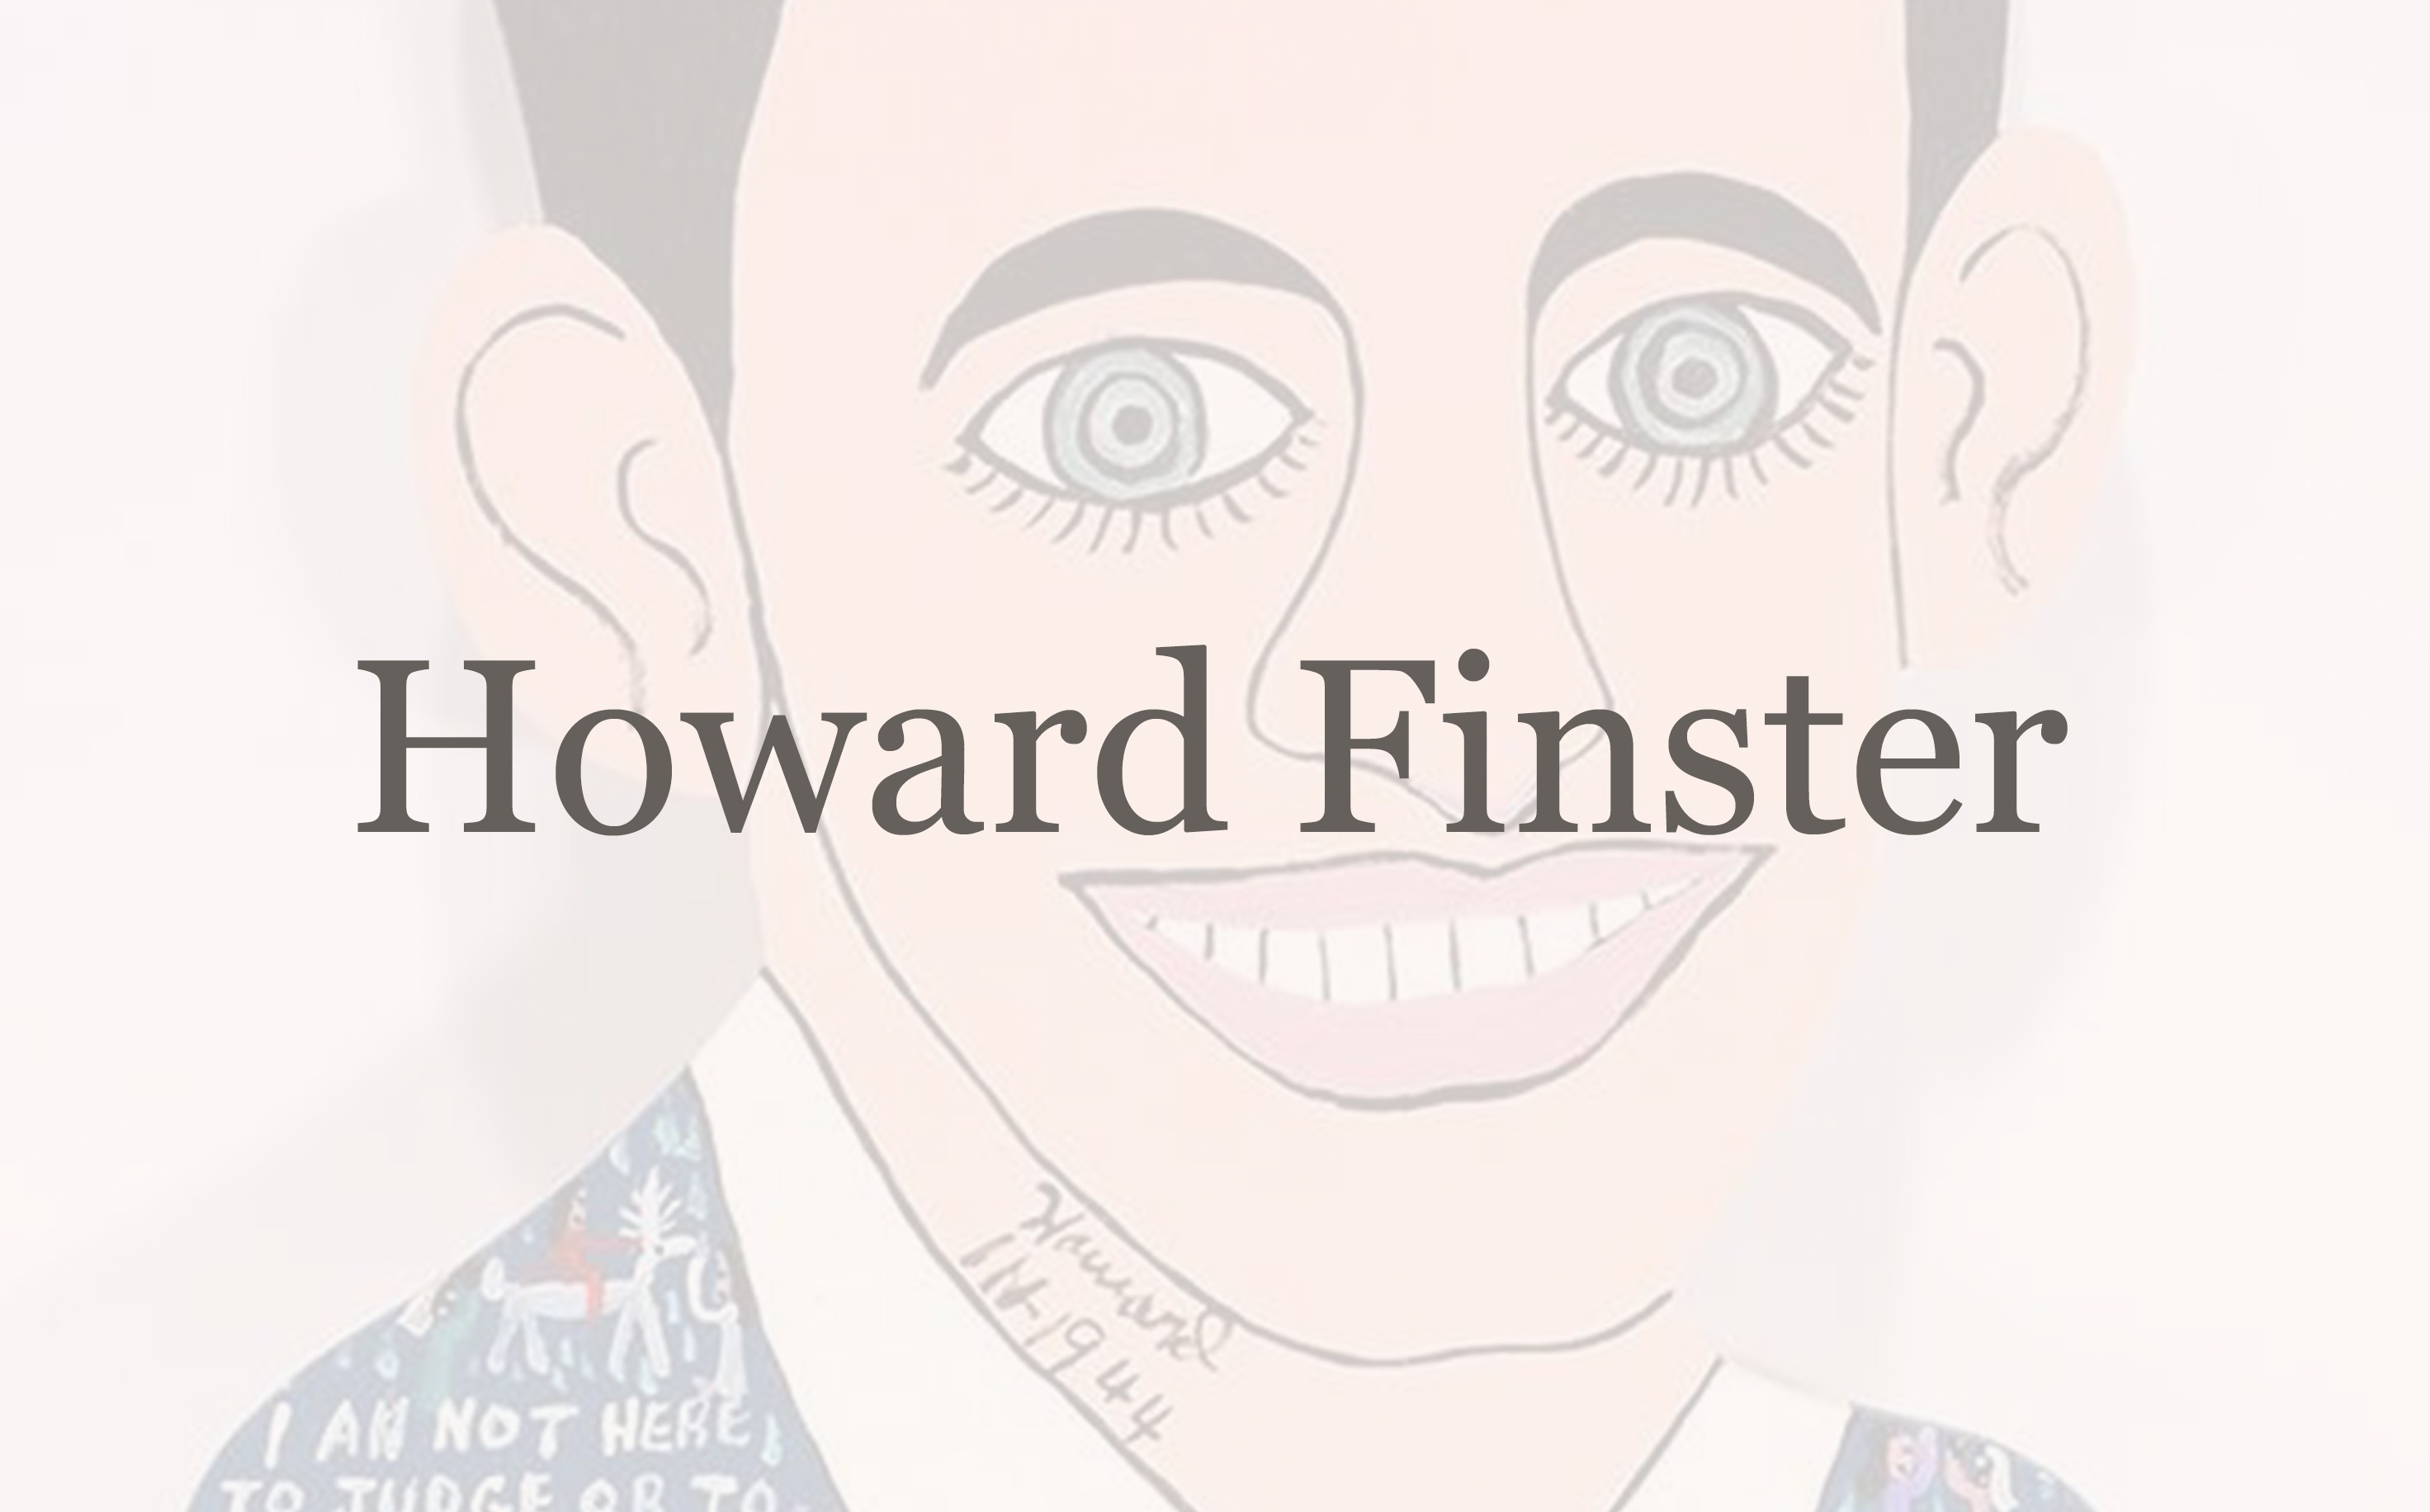 Howard Finster